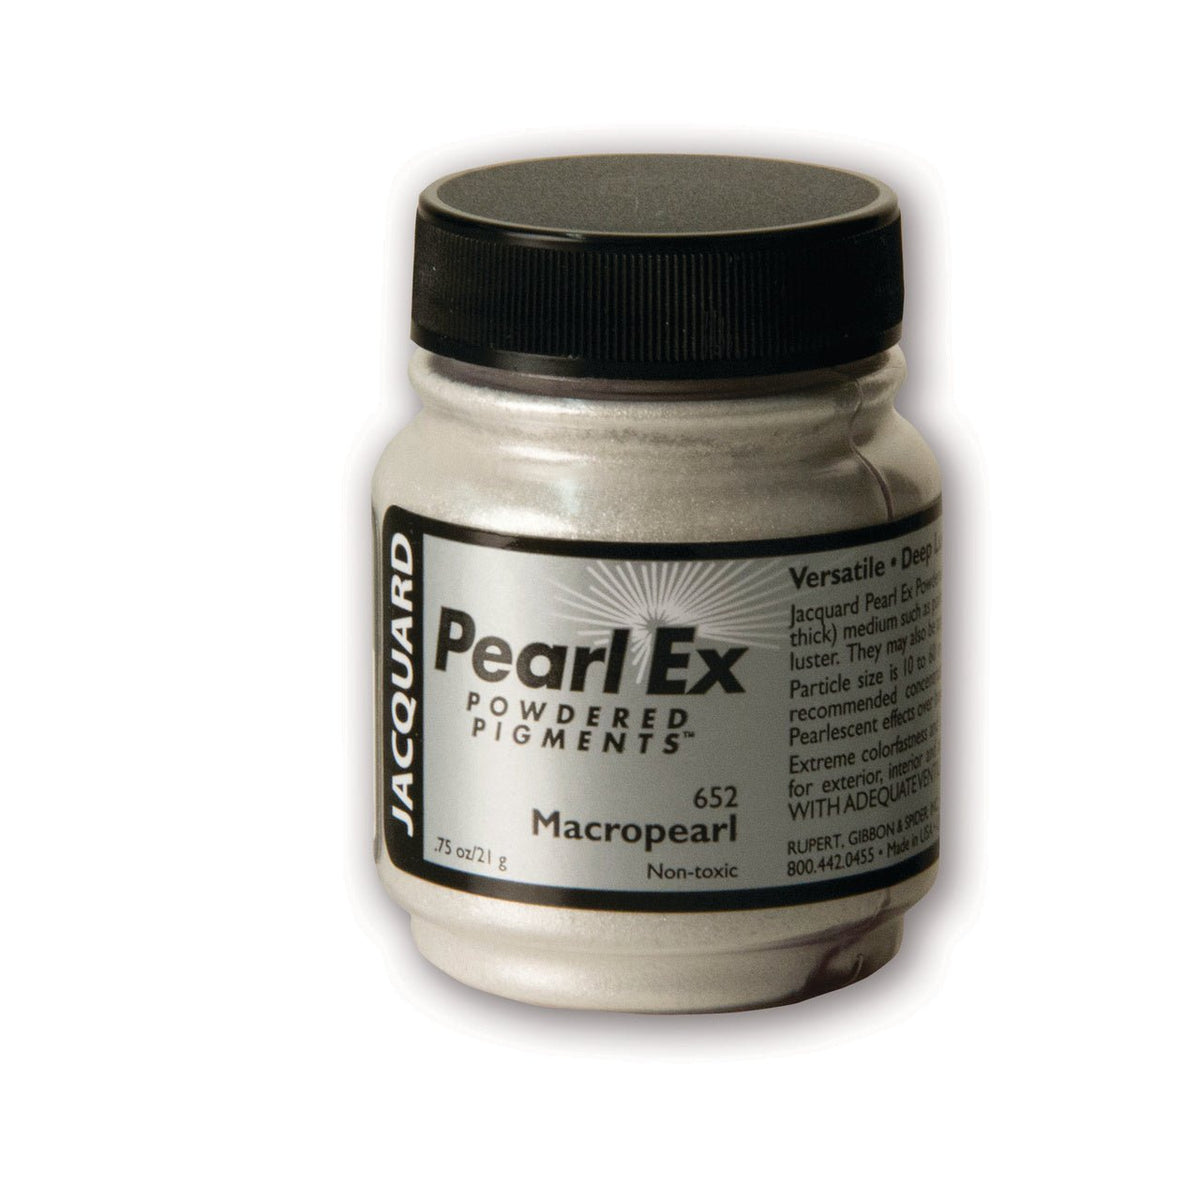 Jacquard Pearl-Ex Powdered Pigment .75 Oz Macropearl - merriartist.com